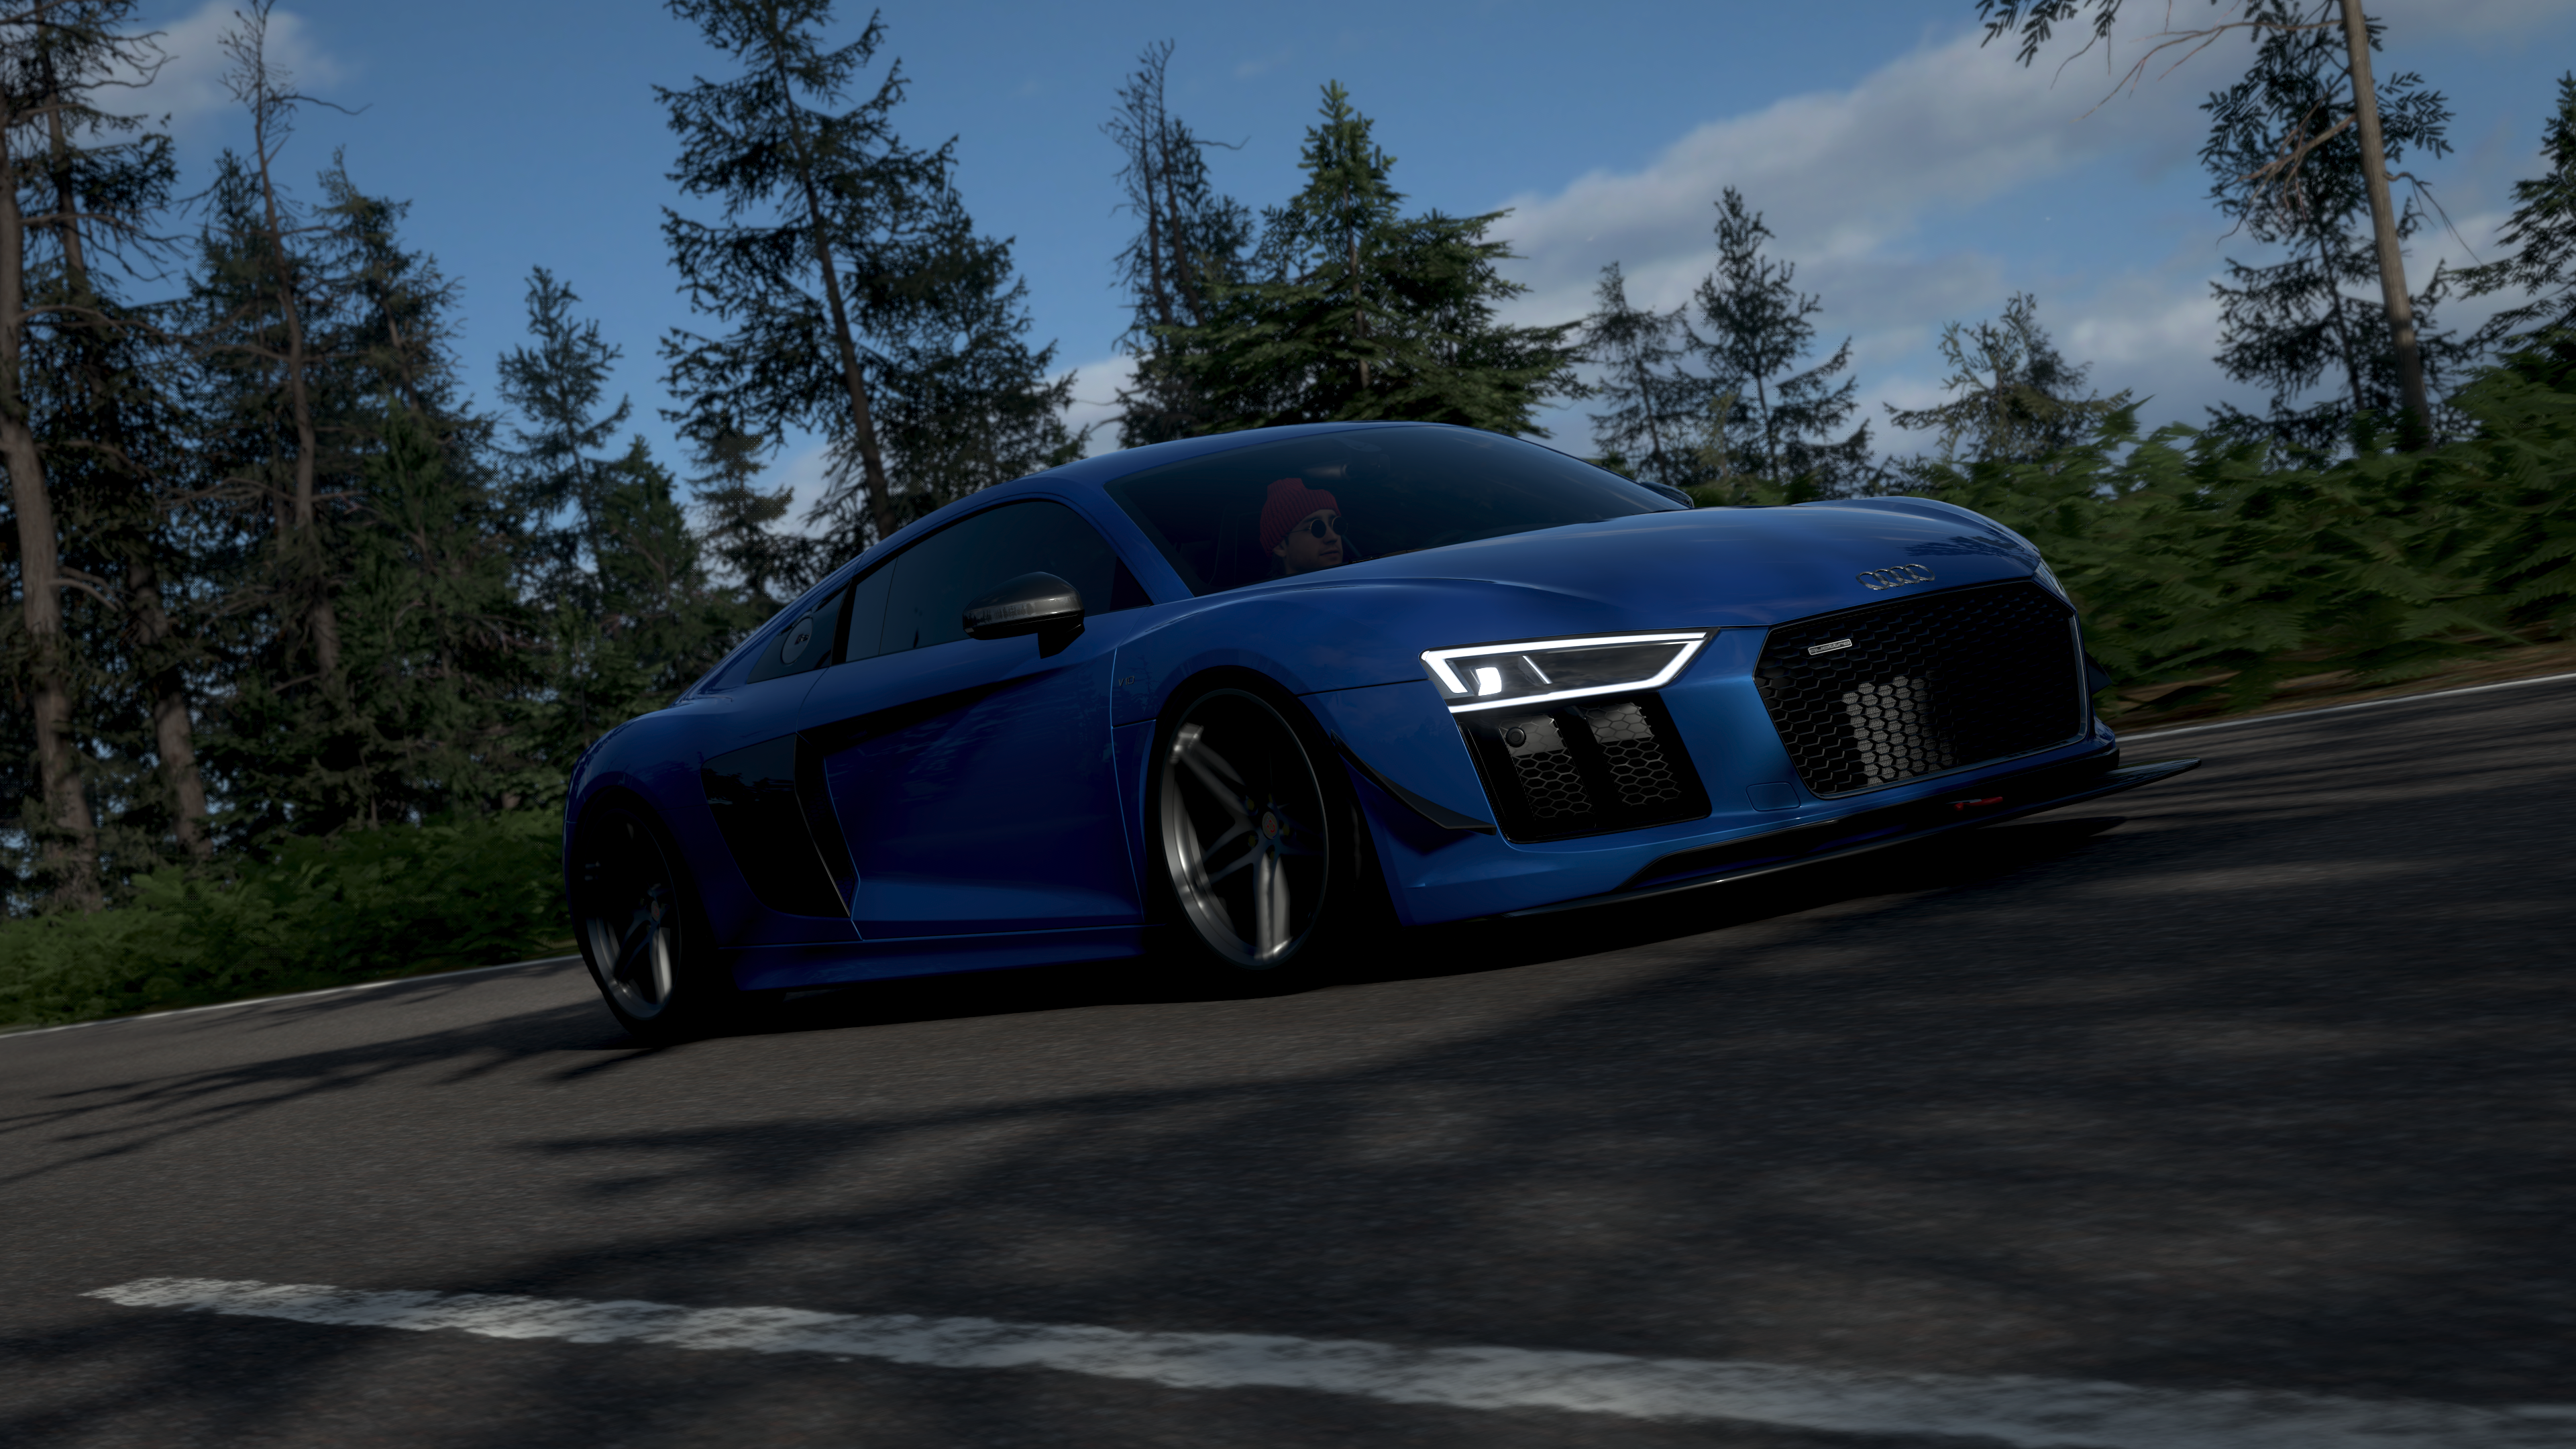 General 3840x2160 Forza Horizon 4 video games blue cars screen shot Audi car vehicle